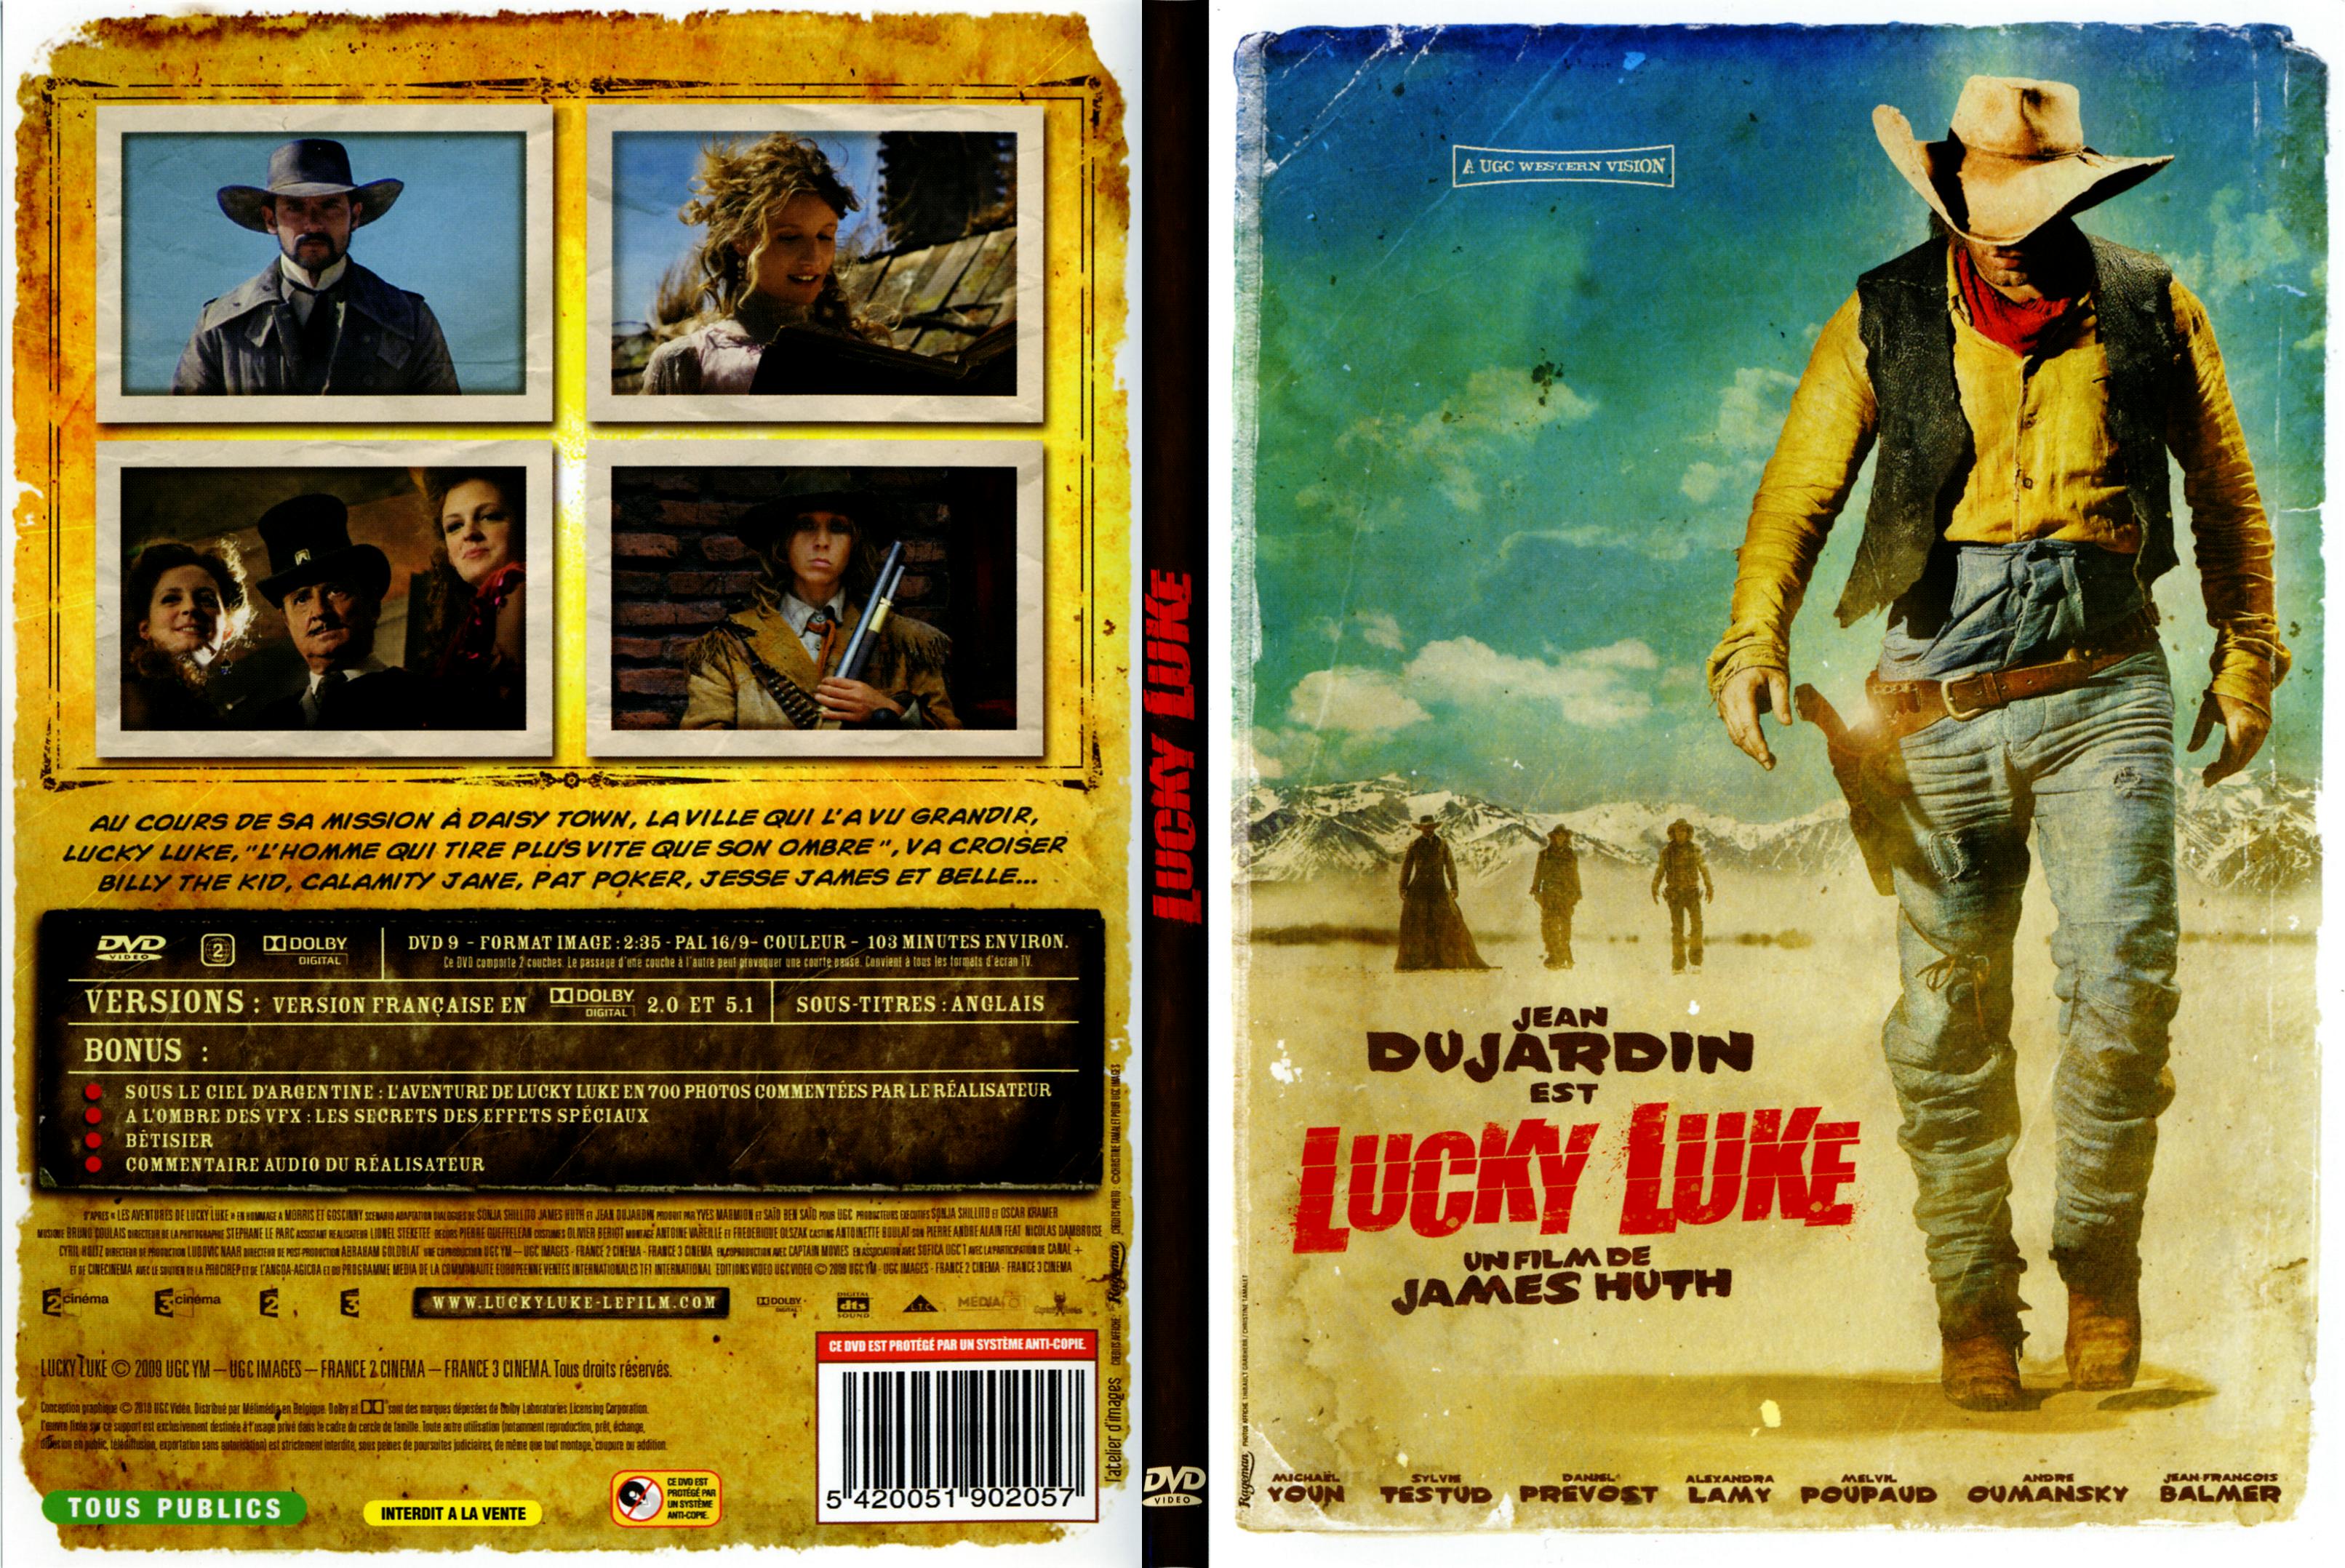 Jaquette DVD Lucky luke (2009) - SLIM